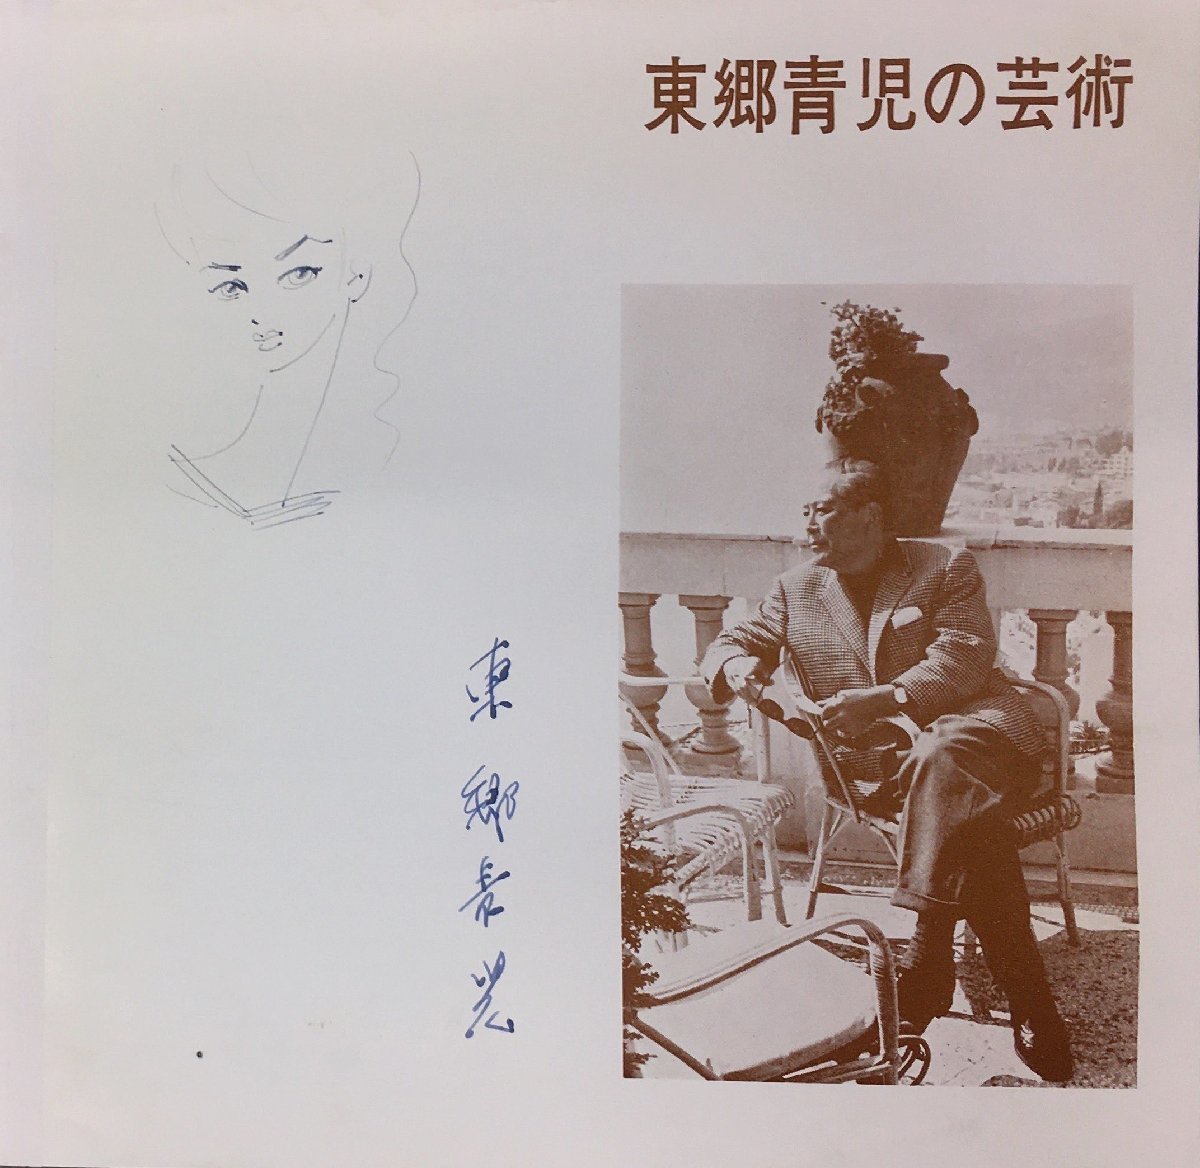 Guaranteed authentic, Togo Seiji, hand-painted female painting, signed The Art of Togo Seiji, Niigata Museum of Art, 1969, Artwork, Painting, Portraits